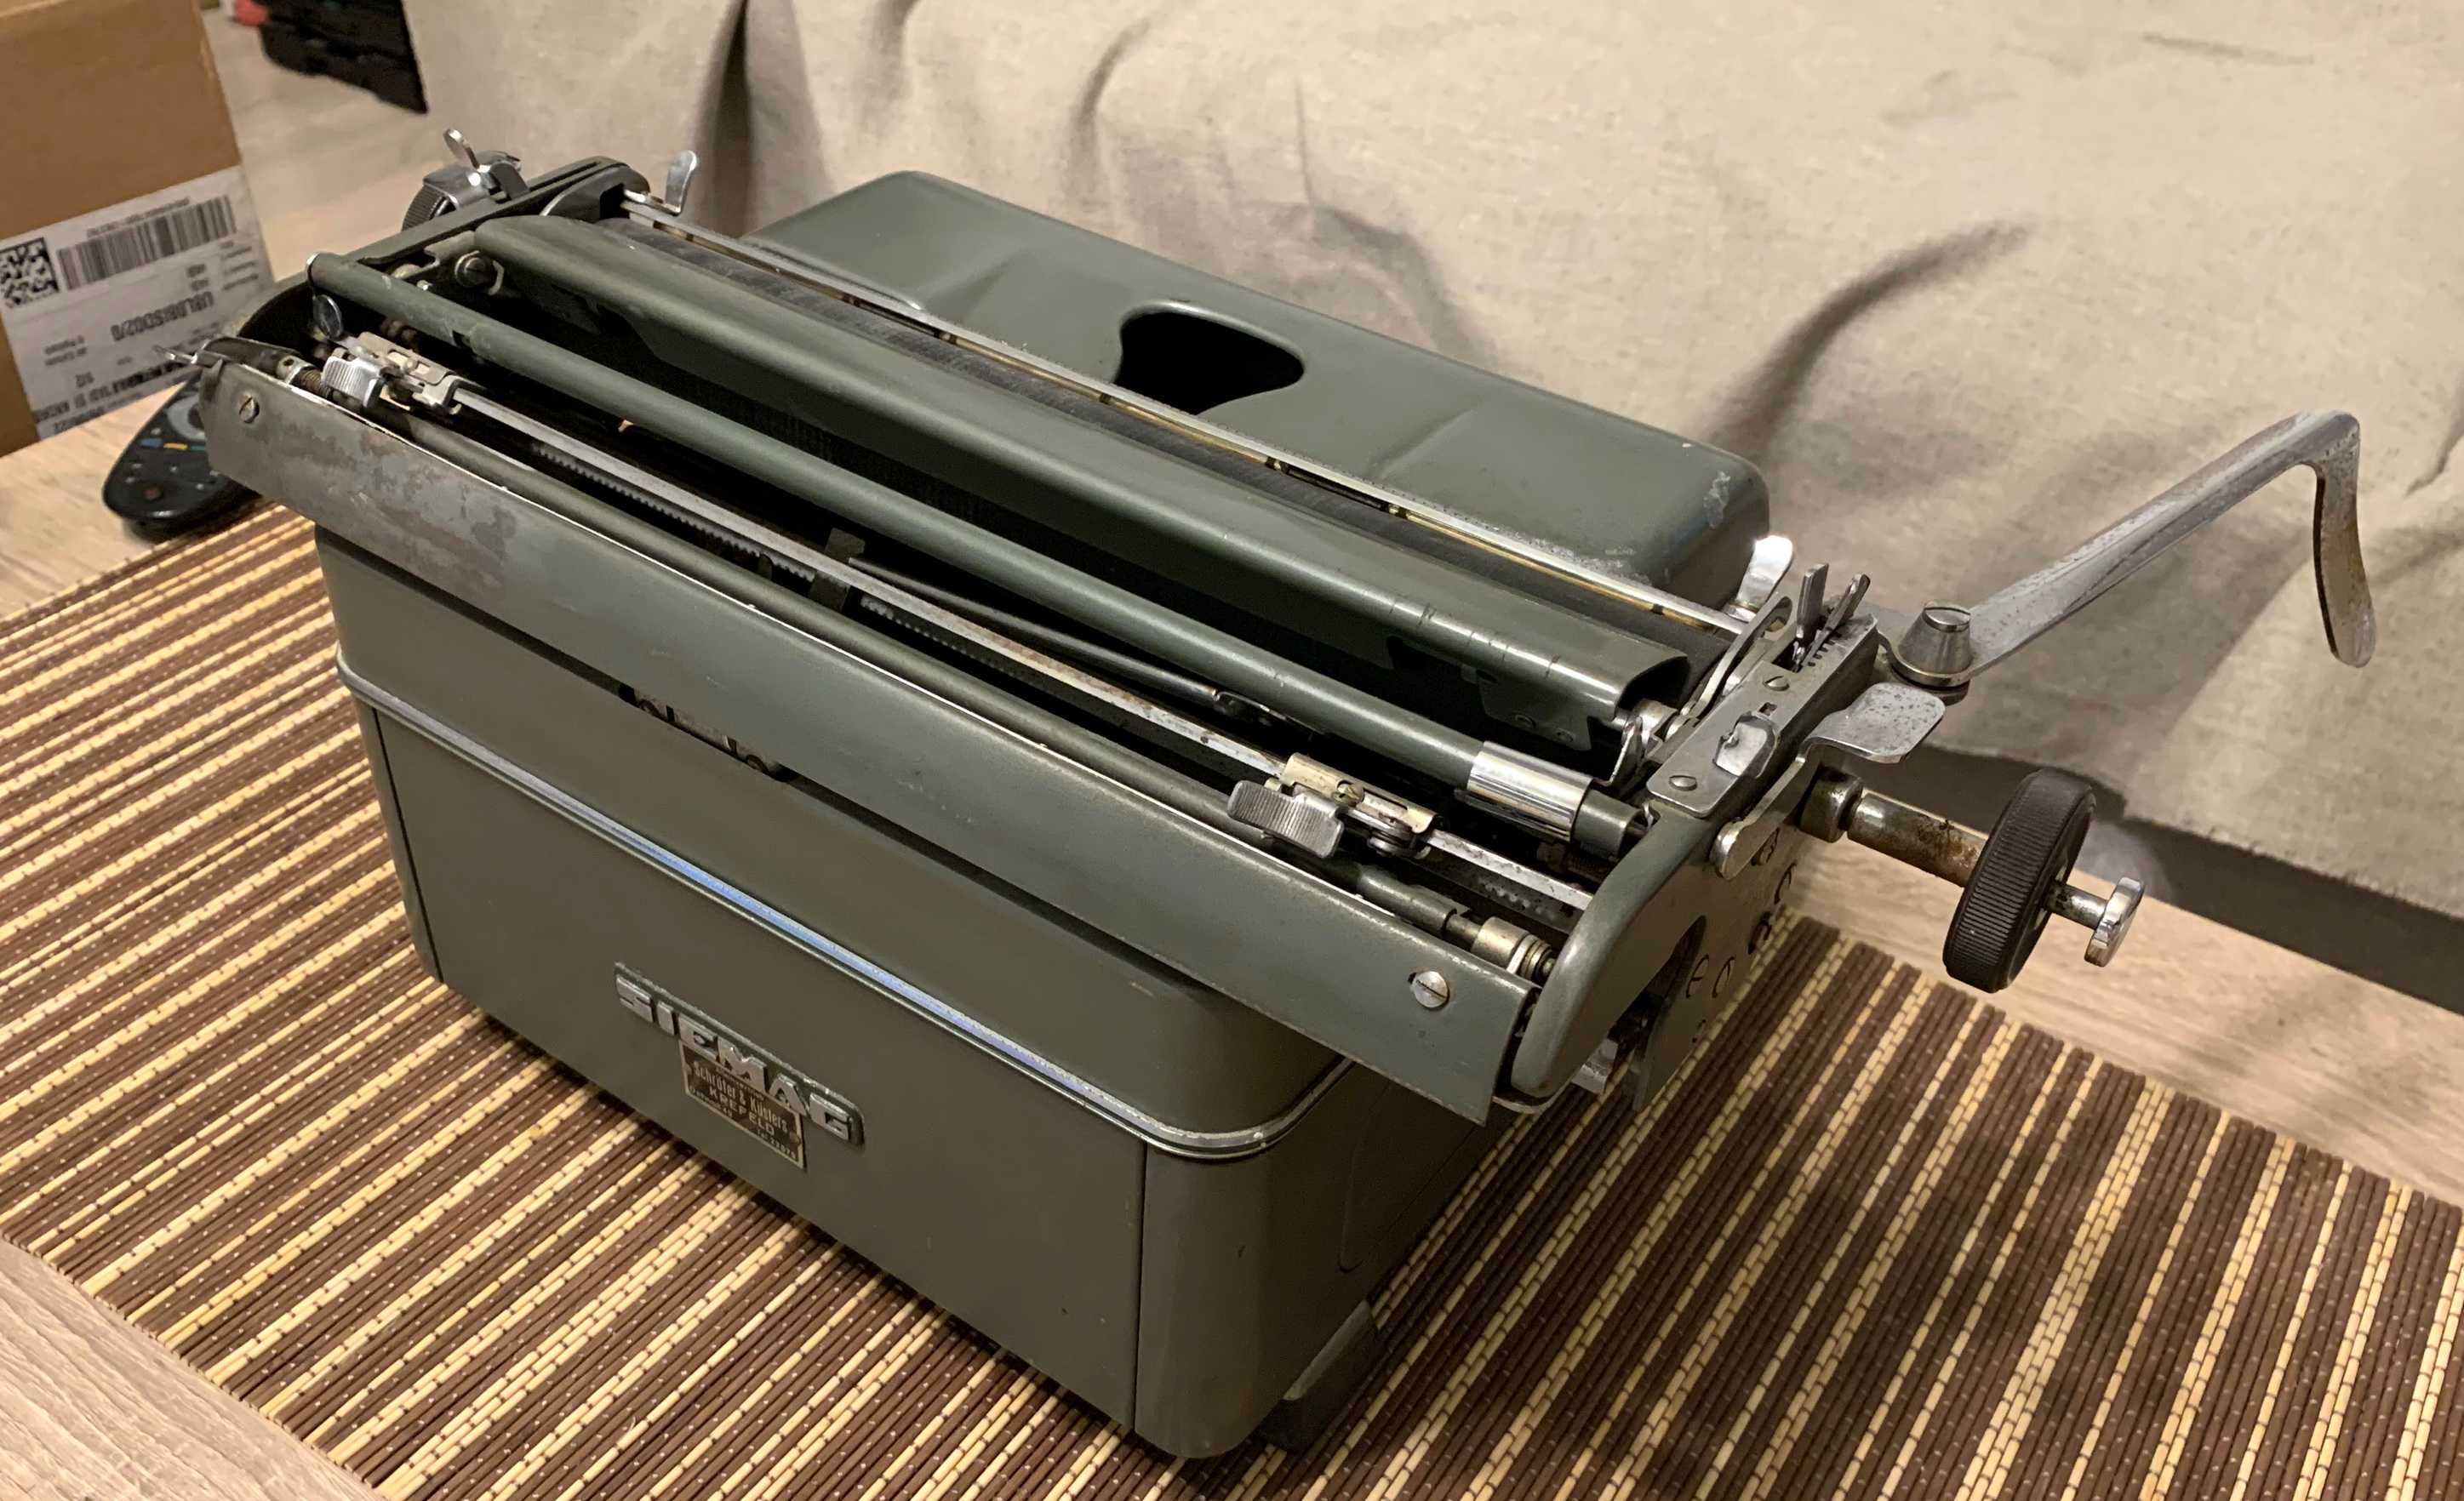 Masina de scris mecanica Siemag , anii 40 germania - vintage